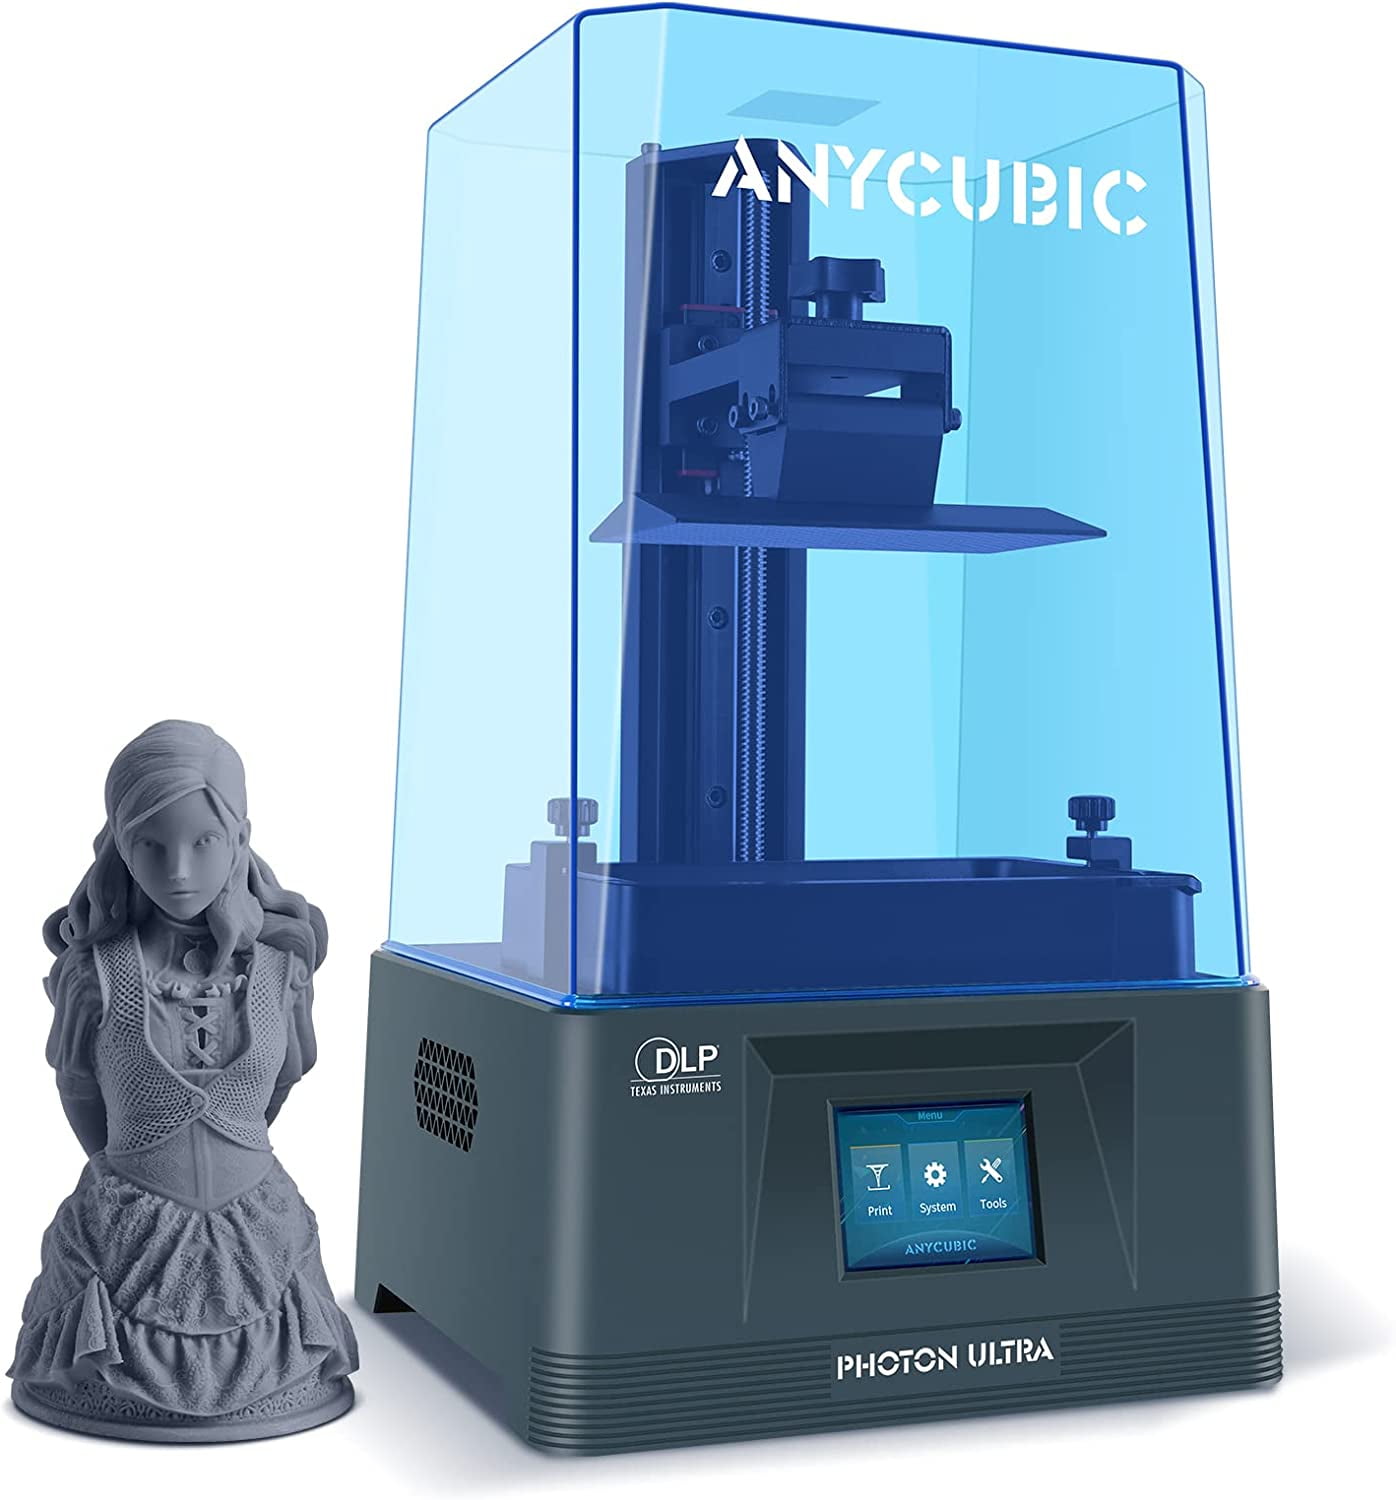 ANYCUBIC Photon Ultra Resin 3D Printer, DLP Desktop with Ultra-Silent Printing, High Precision, Low Power, Build Volume 4.03'' x 2.26'' x 6.5'' - Walmart.com